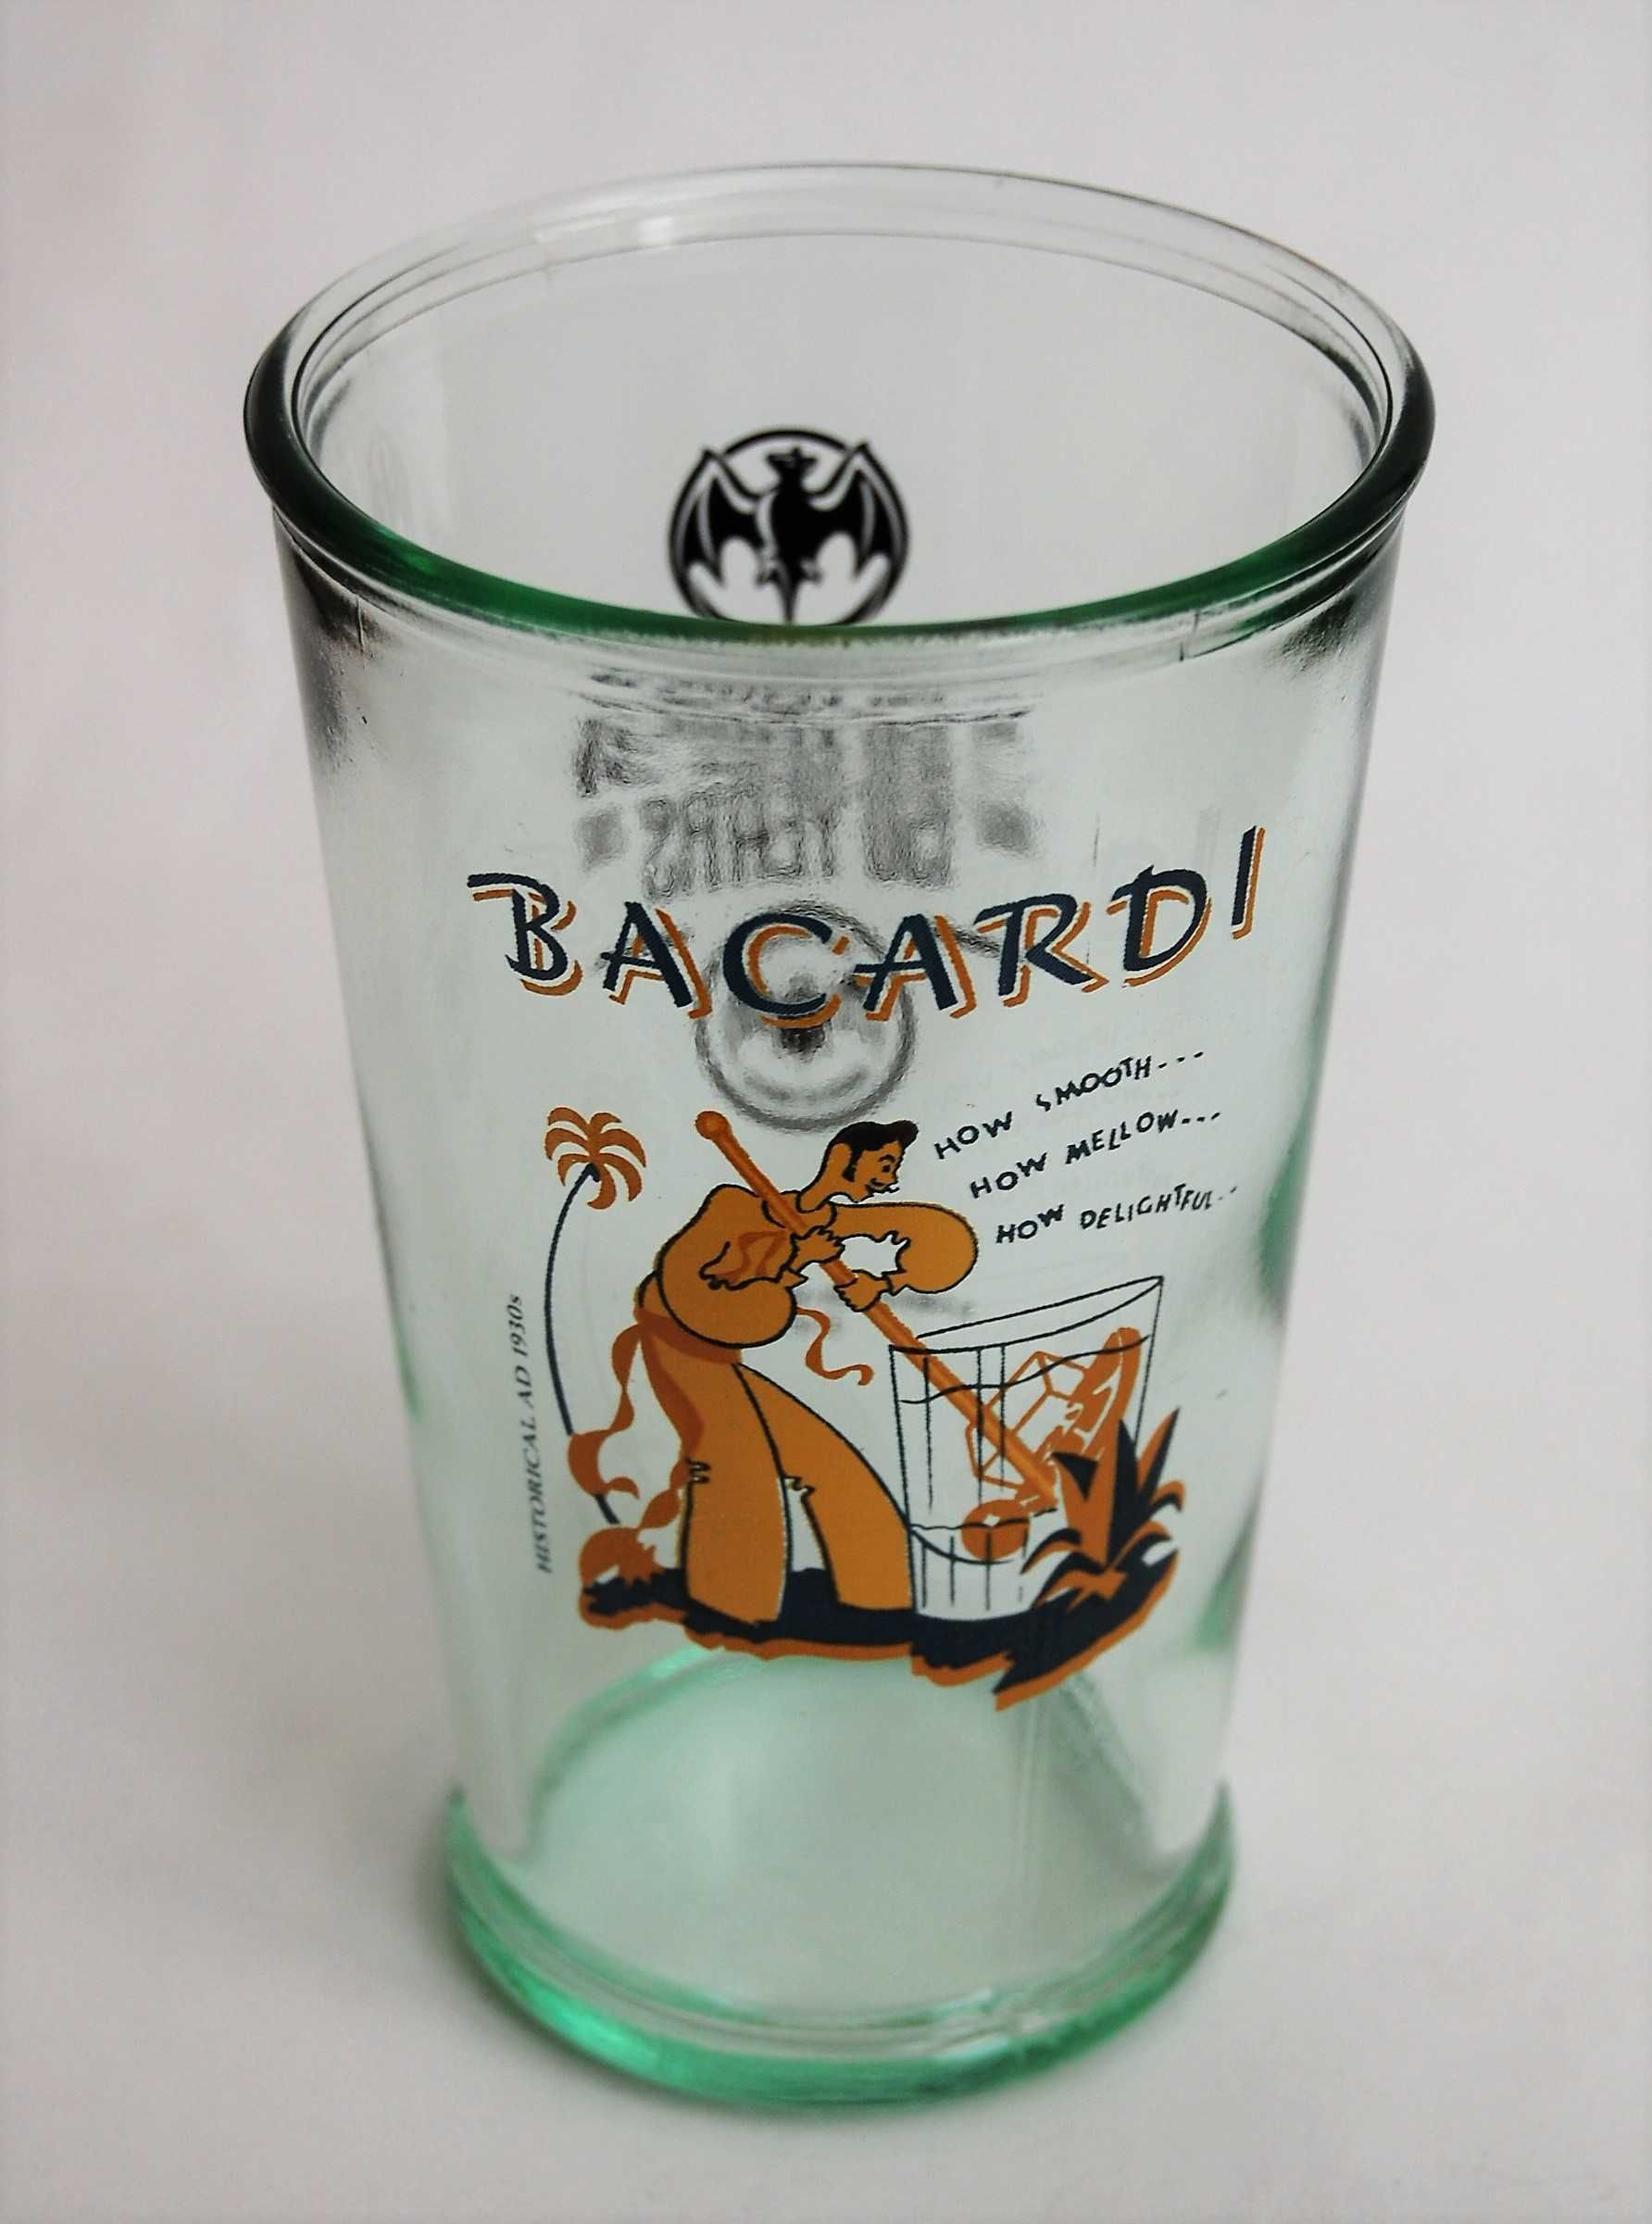 Szklanka Bacardi 150 lat 2012 limitowana 300 ml